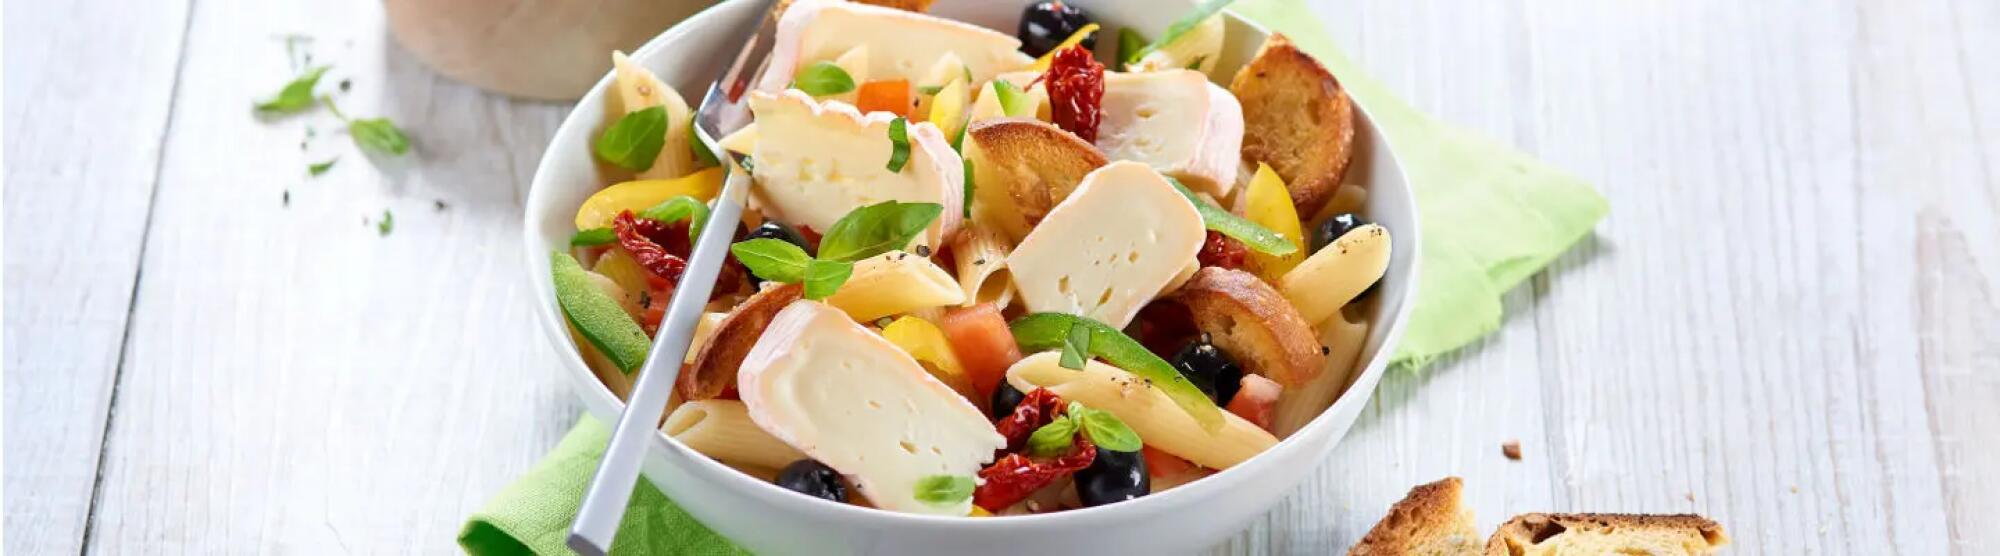 Recette : Salade de pâtes italienne au fromage